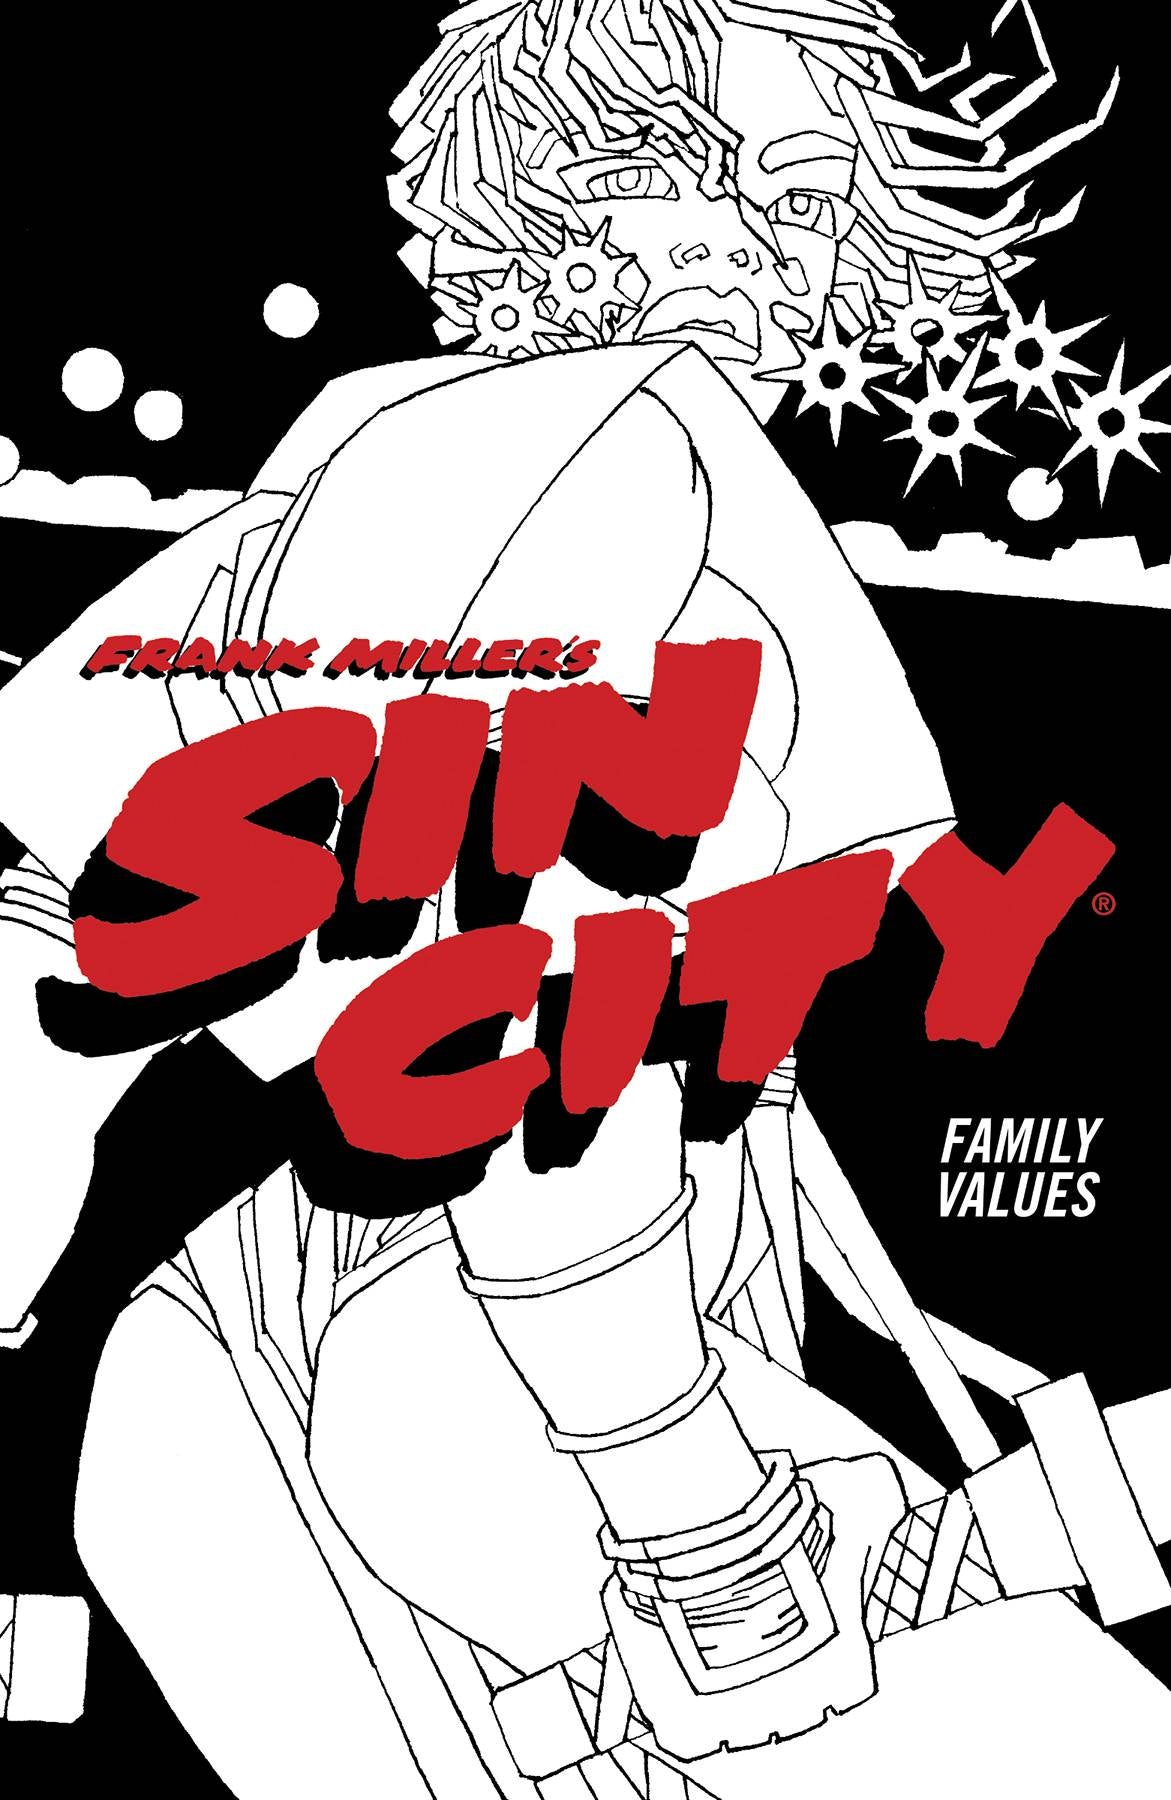 SIN CITY VOLUME 05